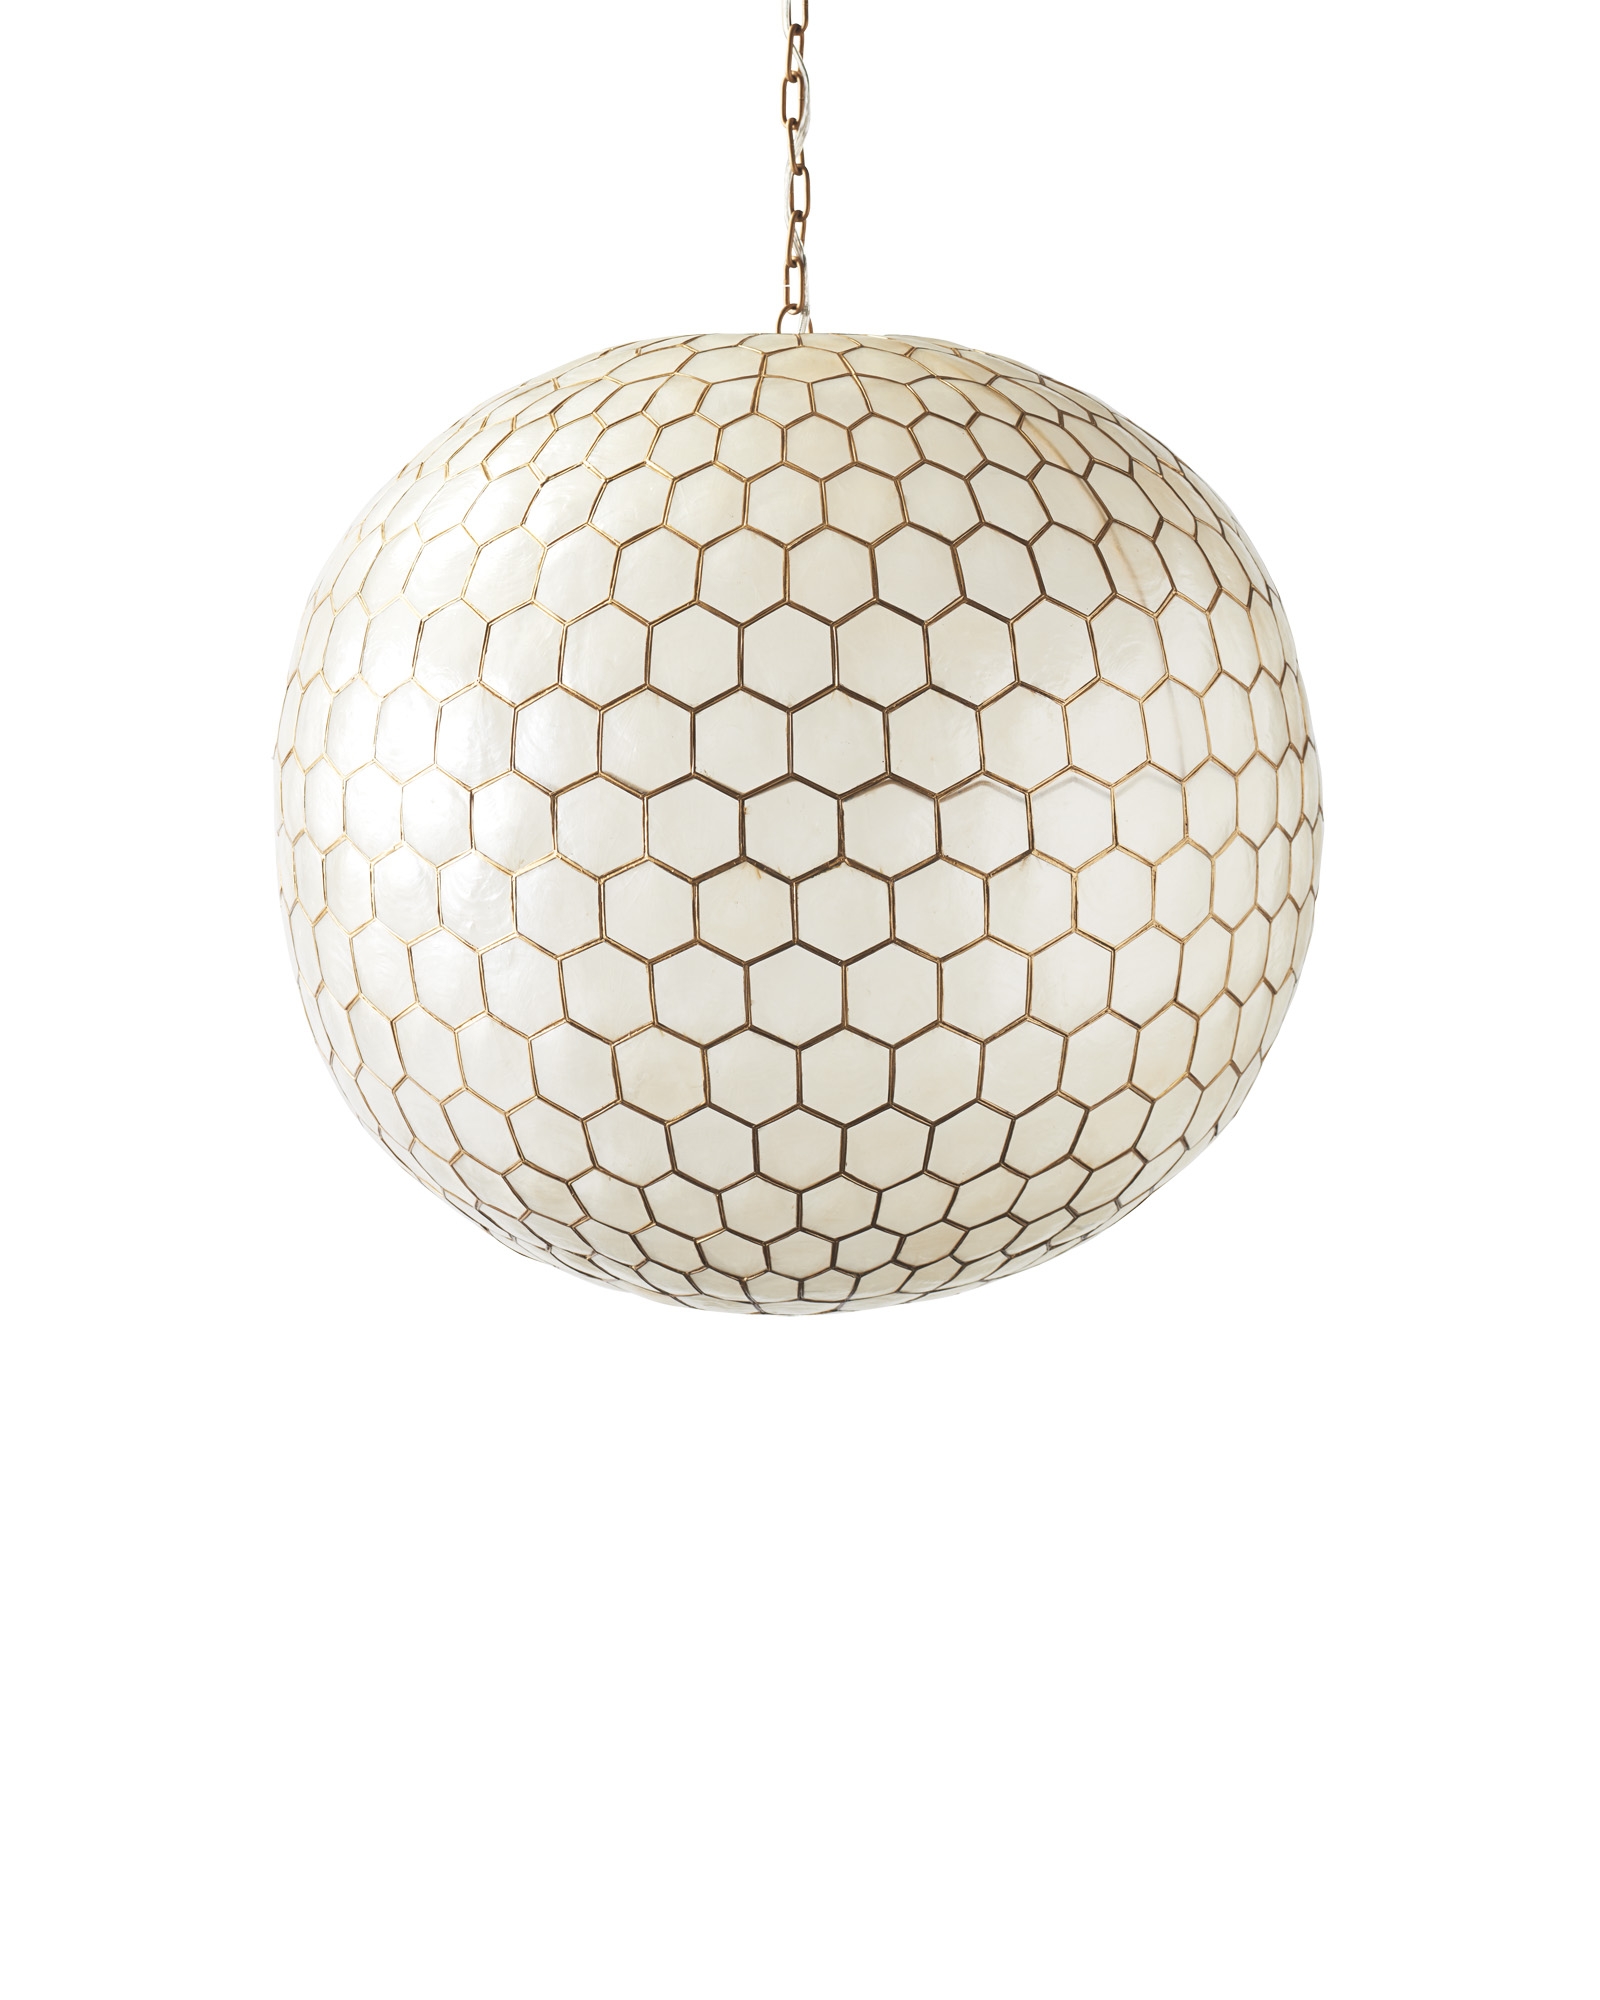 Capiz Honeycomb Chandelier - Small - Image 0